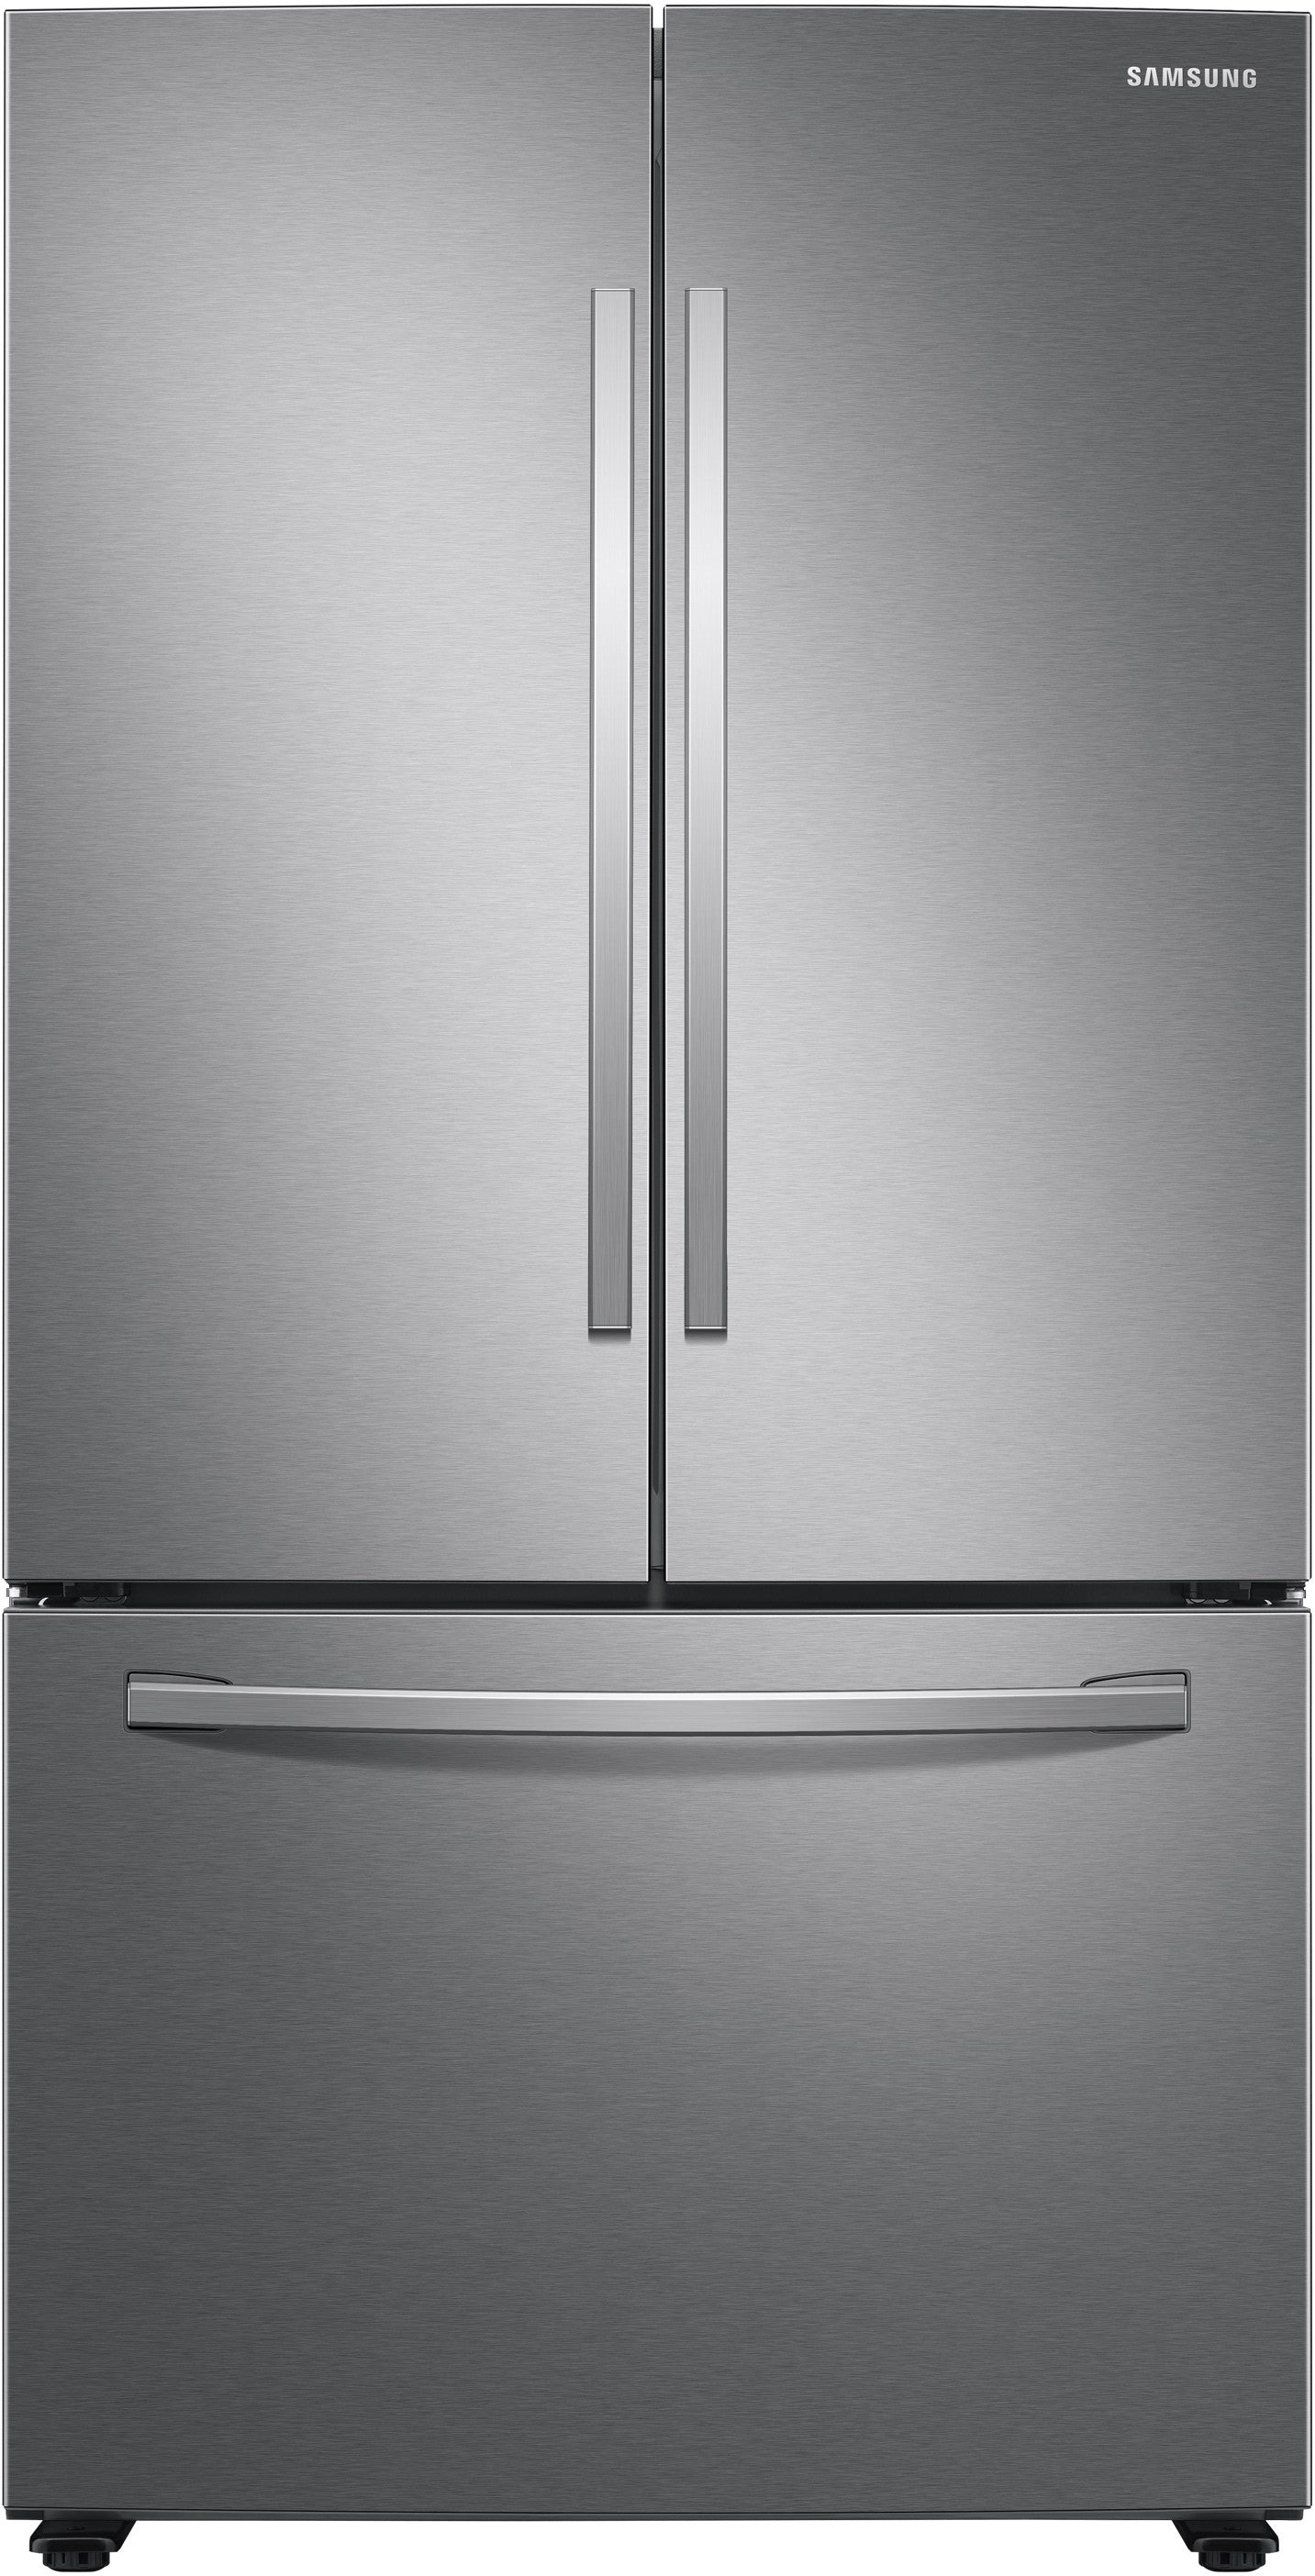 Samsung RF28T5001SR/AA 28 Cu. Ft. Large Capacity 3-Door Refrigerator